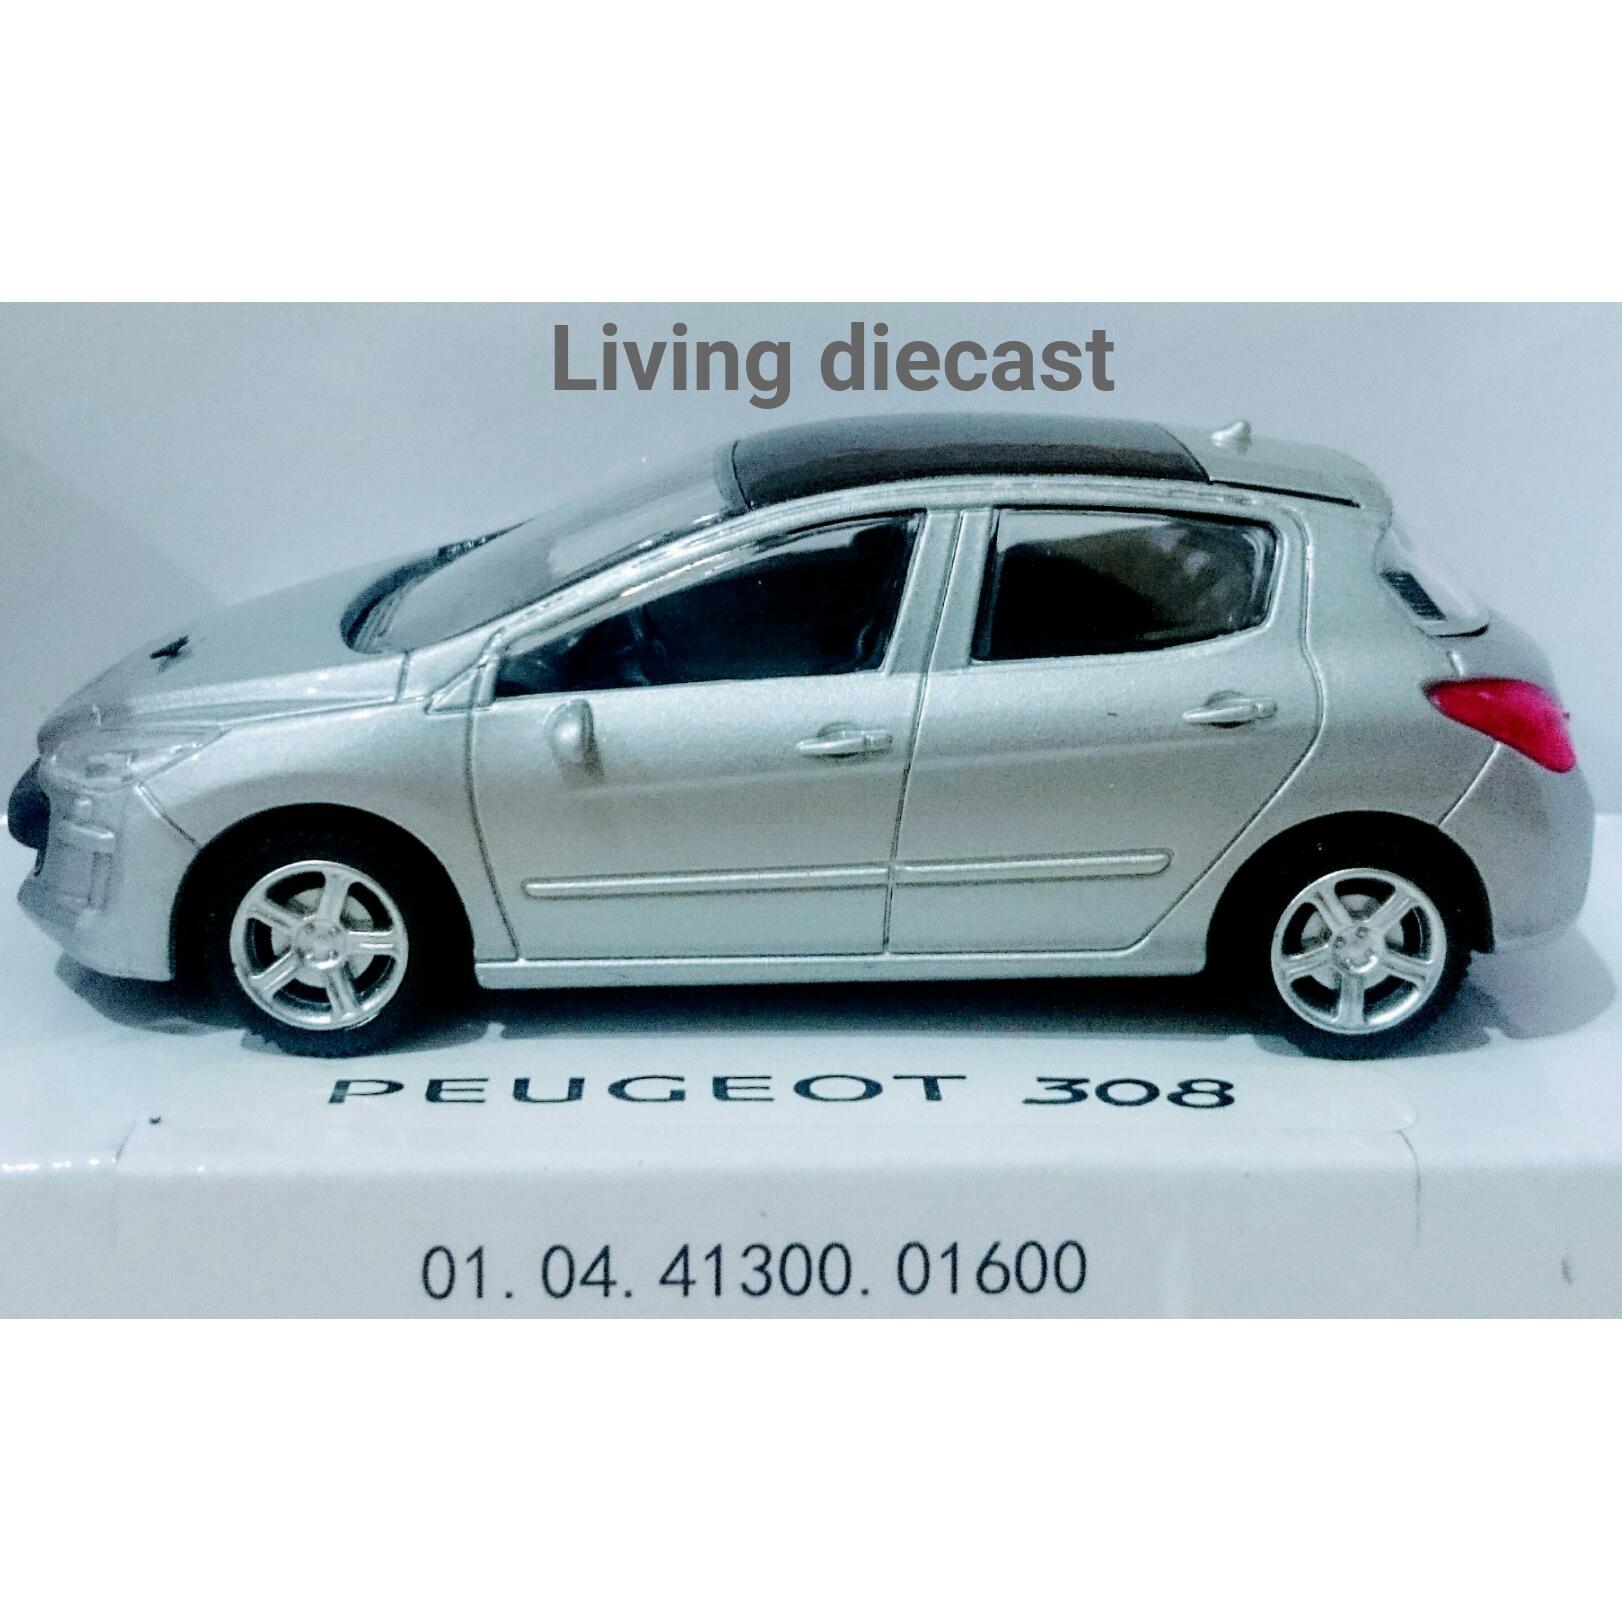 Cari Harga Diecast Miniatur Mobil Peugeot Series Online Database